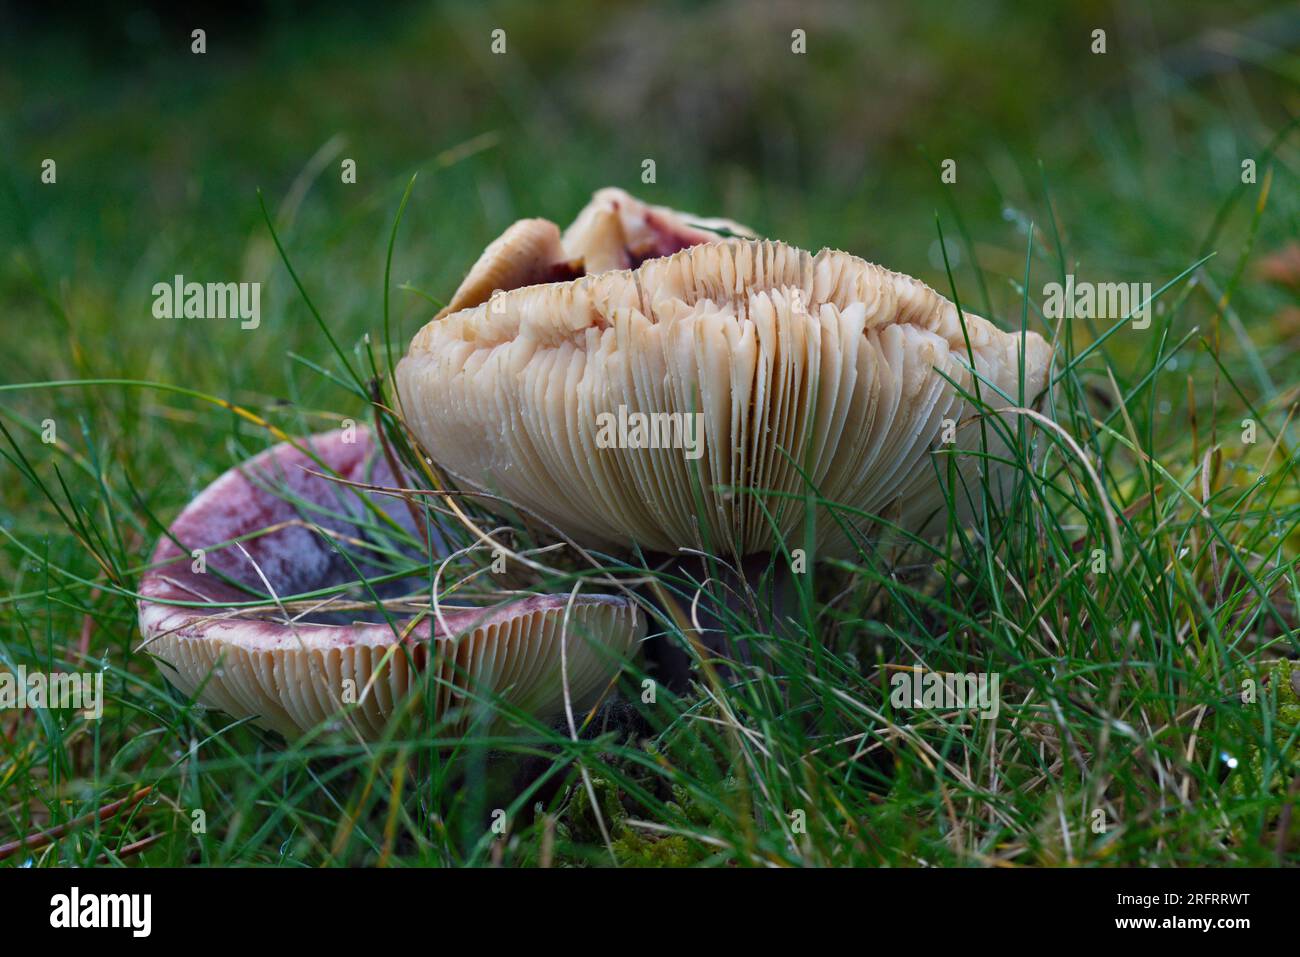 Russula sp  mushroom in the forest. Seta de Russula sp en el bosque Stock Photo